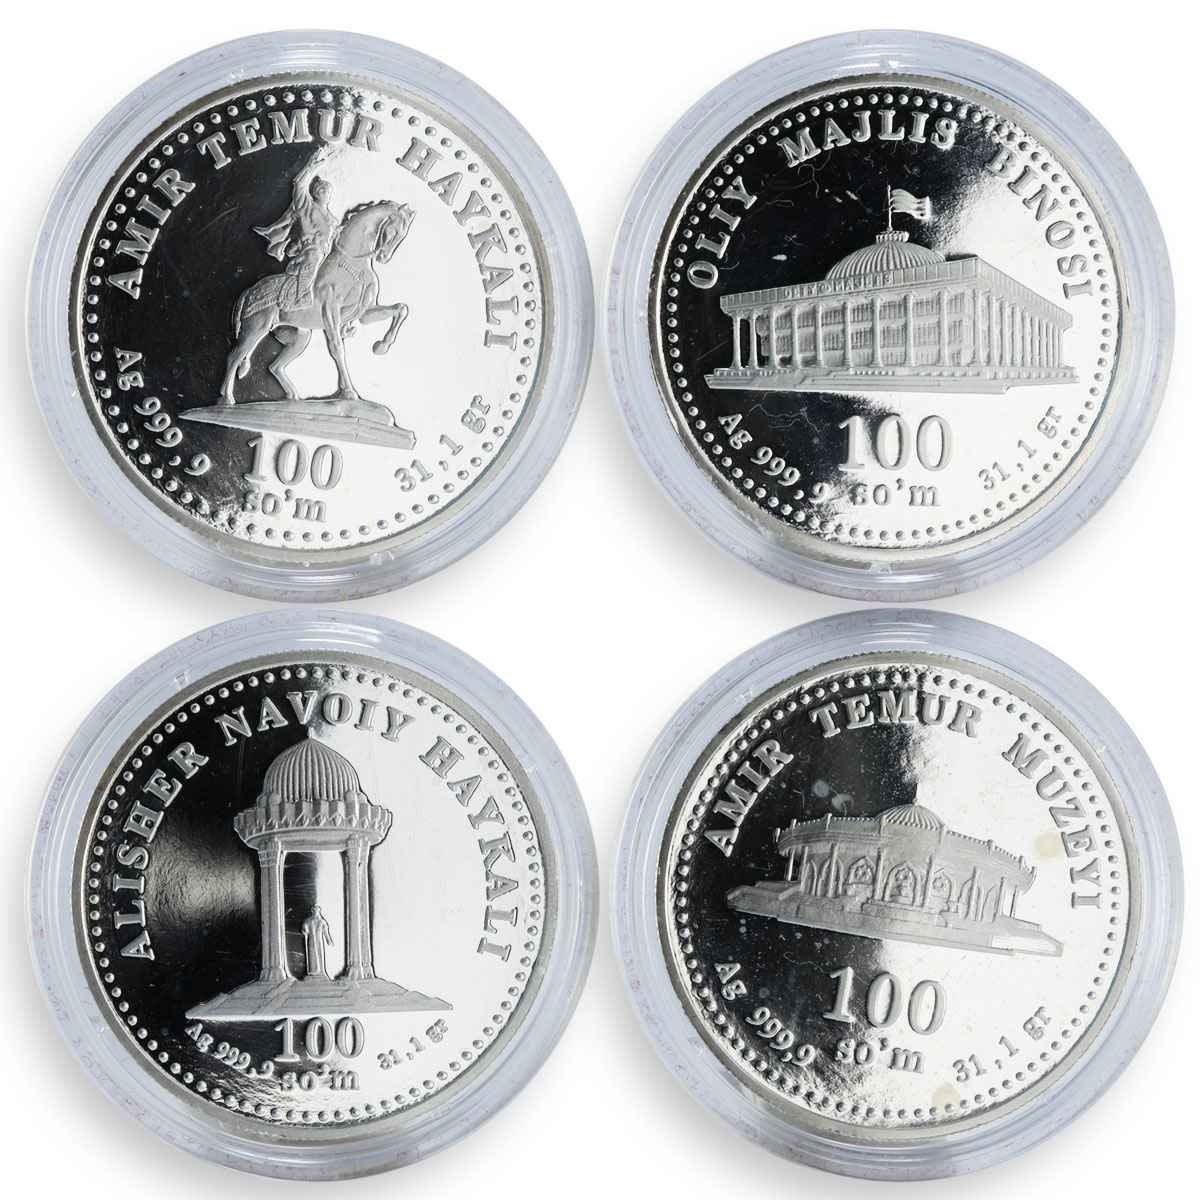 Uzbekistan set 4 coins Historical-Architectural Monuments proof silver 1998